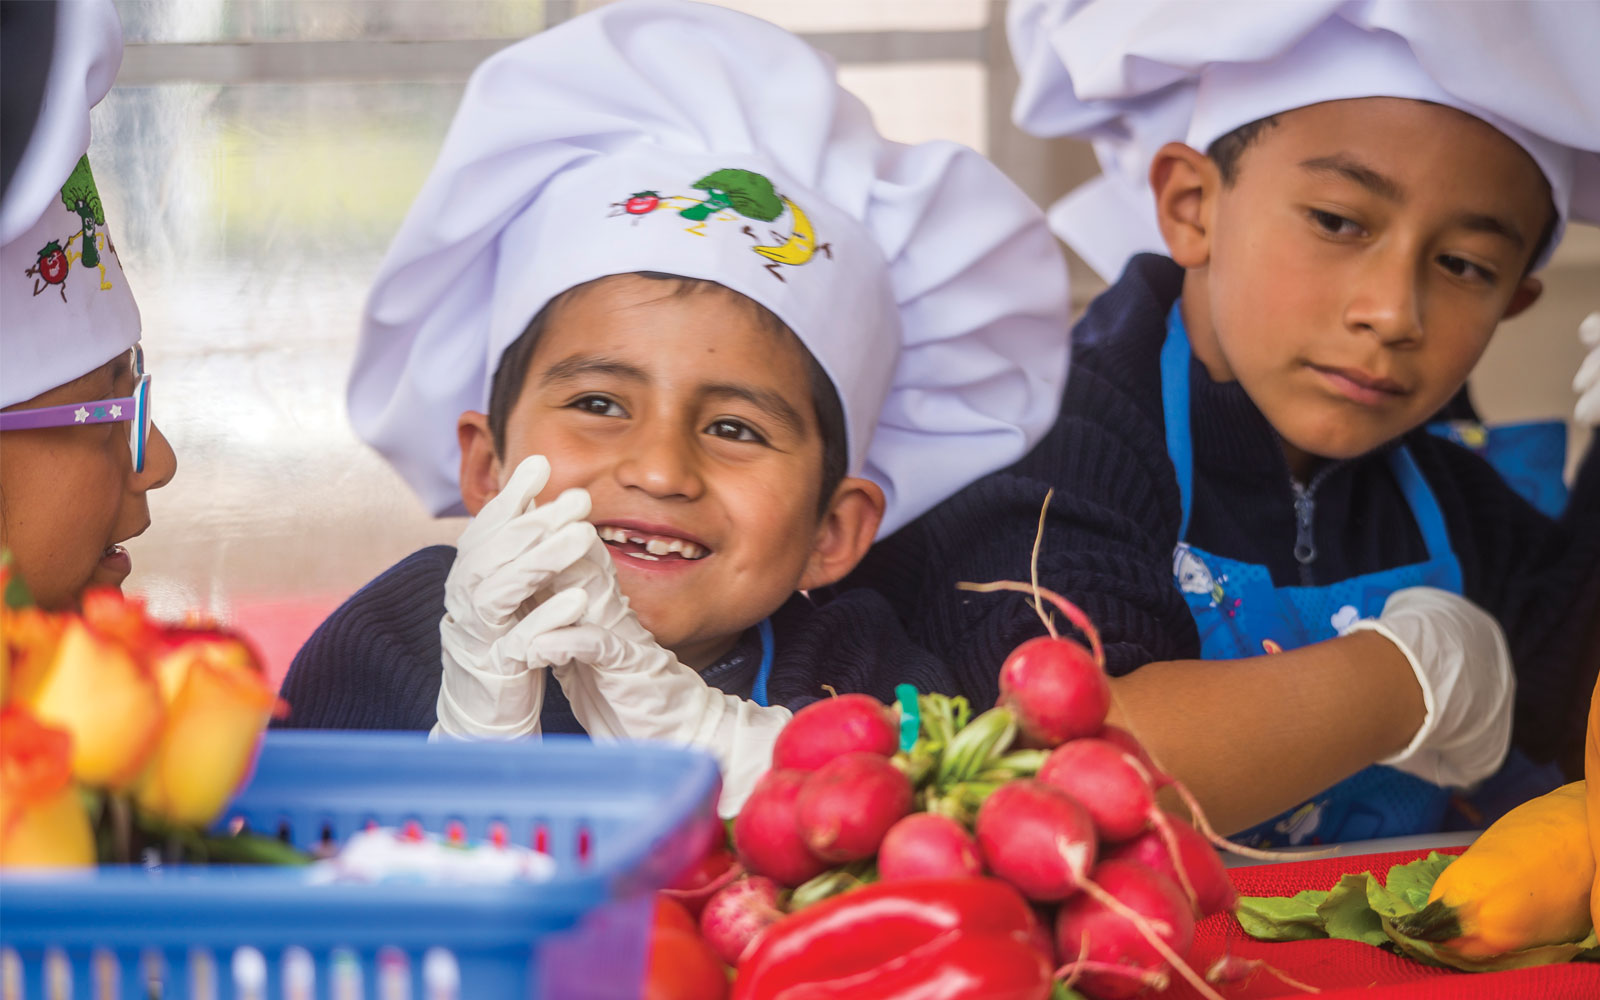 Kids in Quito, Ecuador, enjoy healthier food in school cafeterias through the Partnership for Healthy Cities.